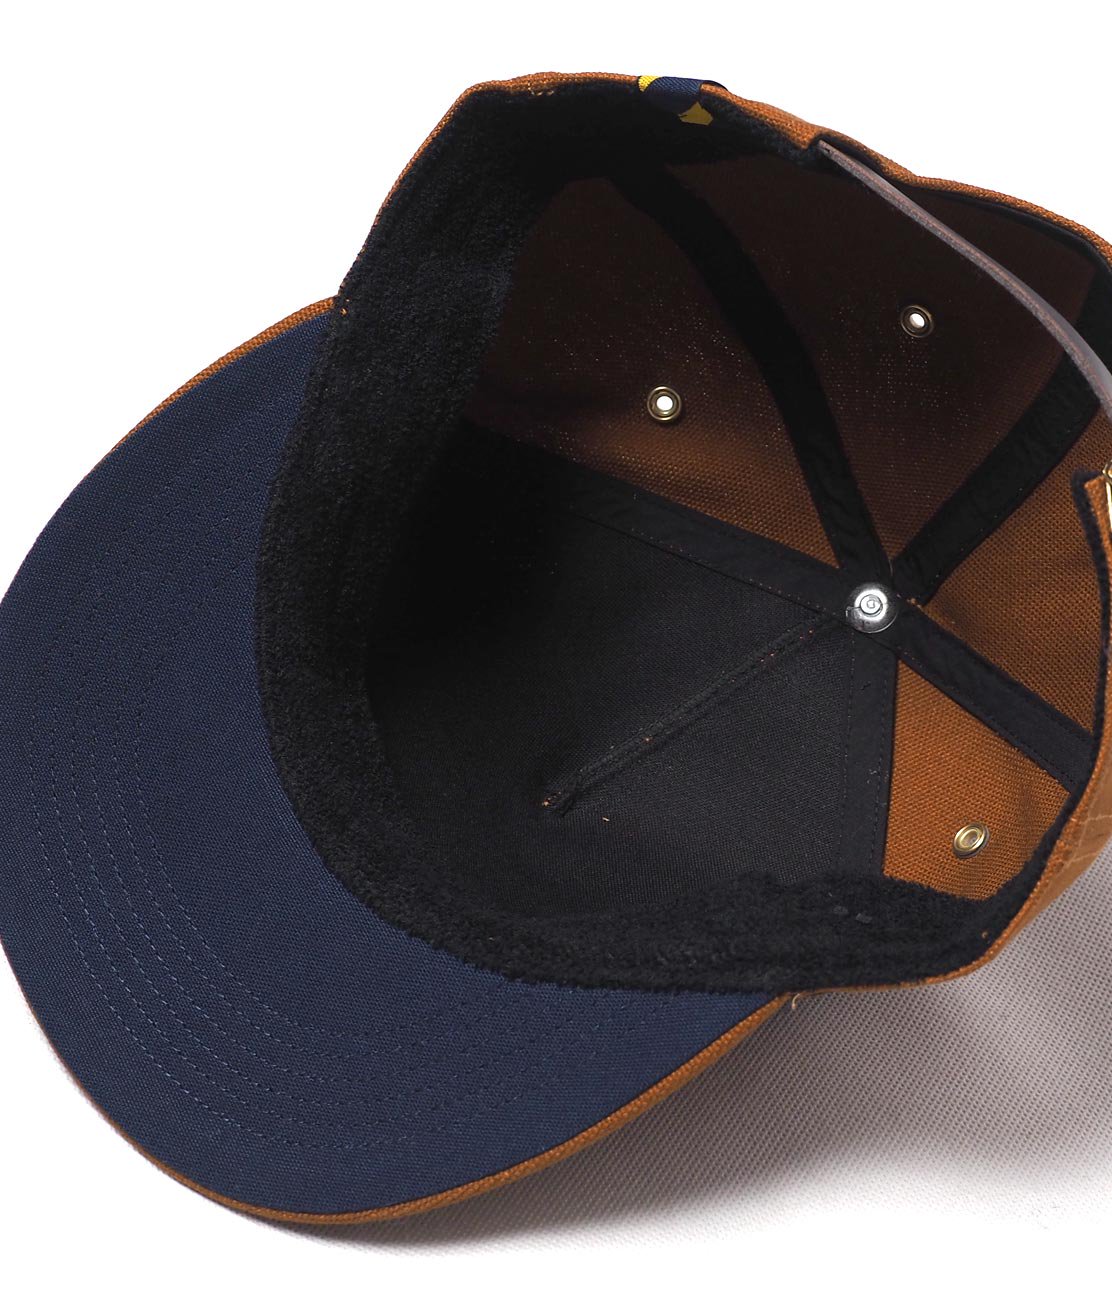 TRAD MARKS】BASIC CAP CV - BROWN キャップ 帽子 帆布 キャンバス 